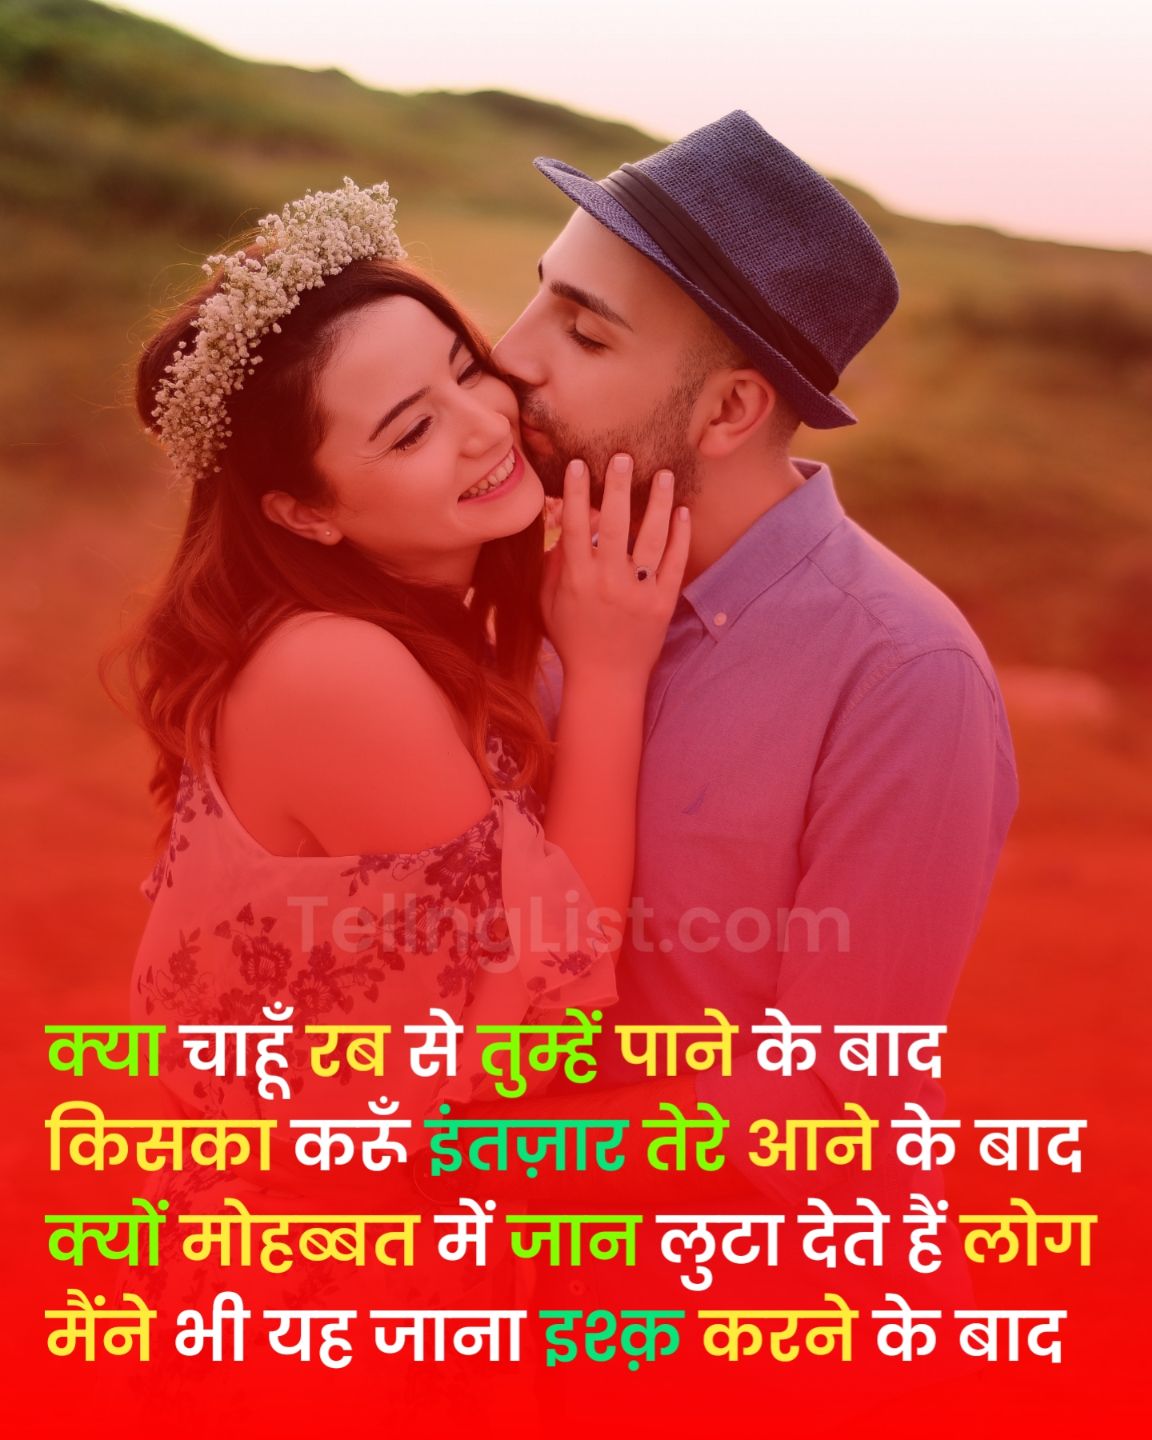 True Love Shayari in Hindi Text | सच्चा प्यार पर ...